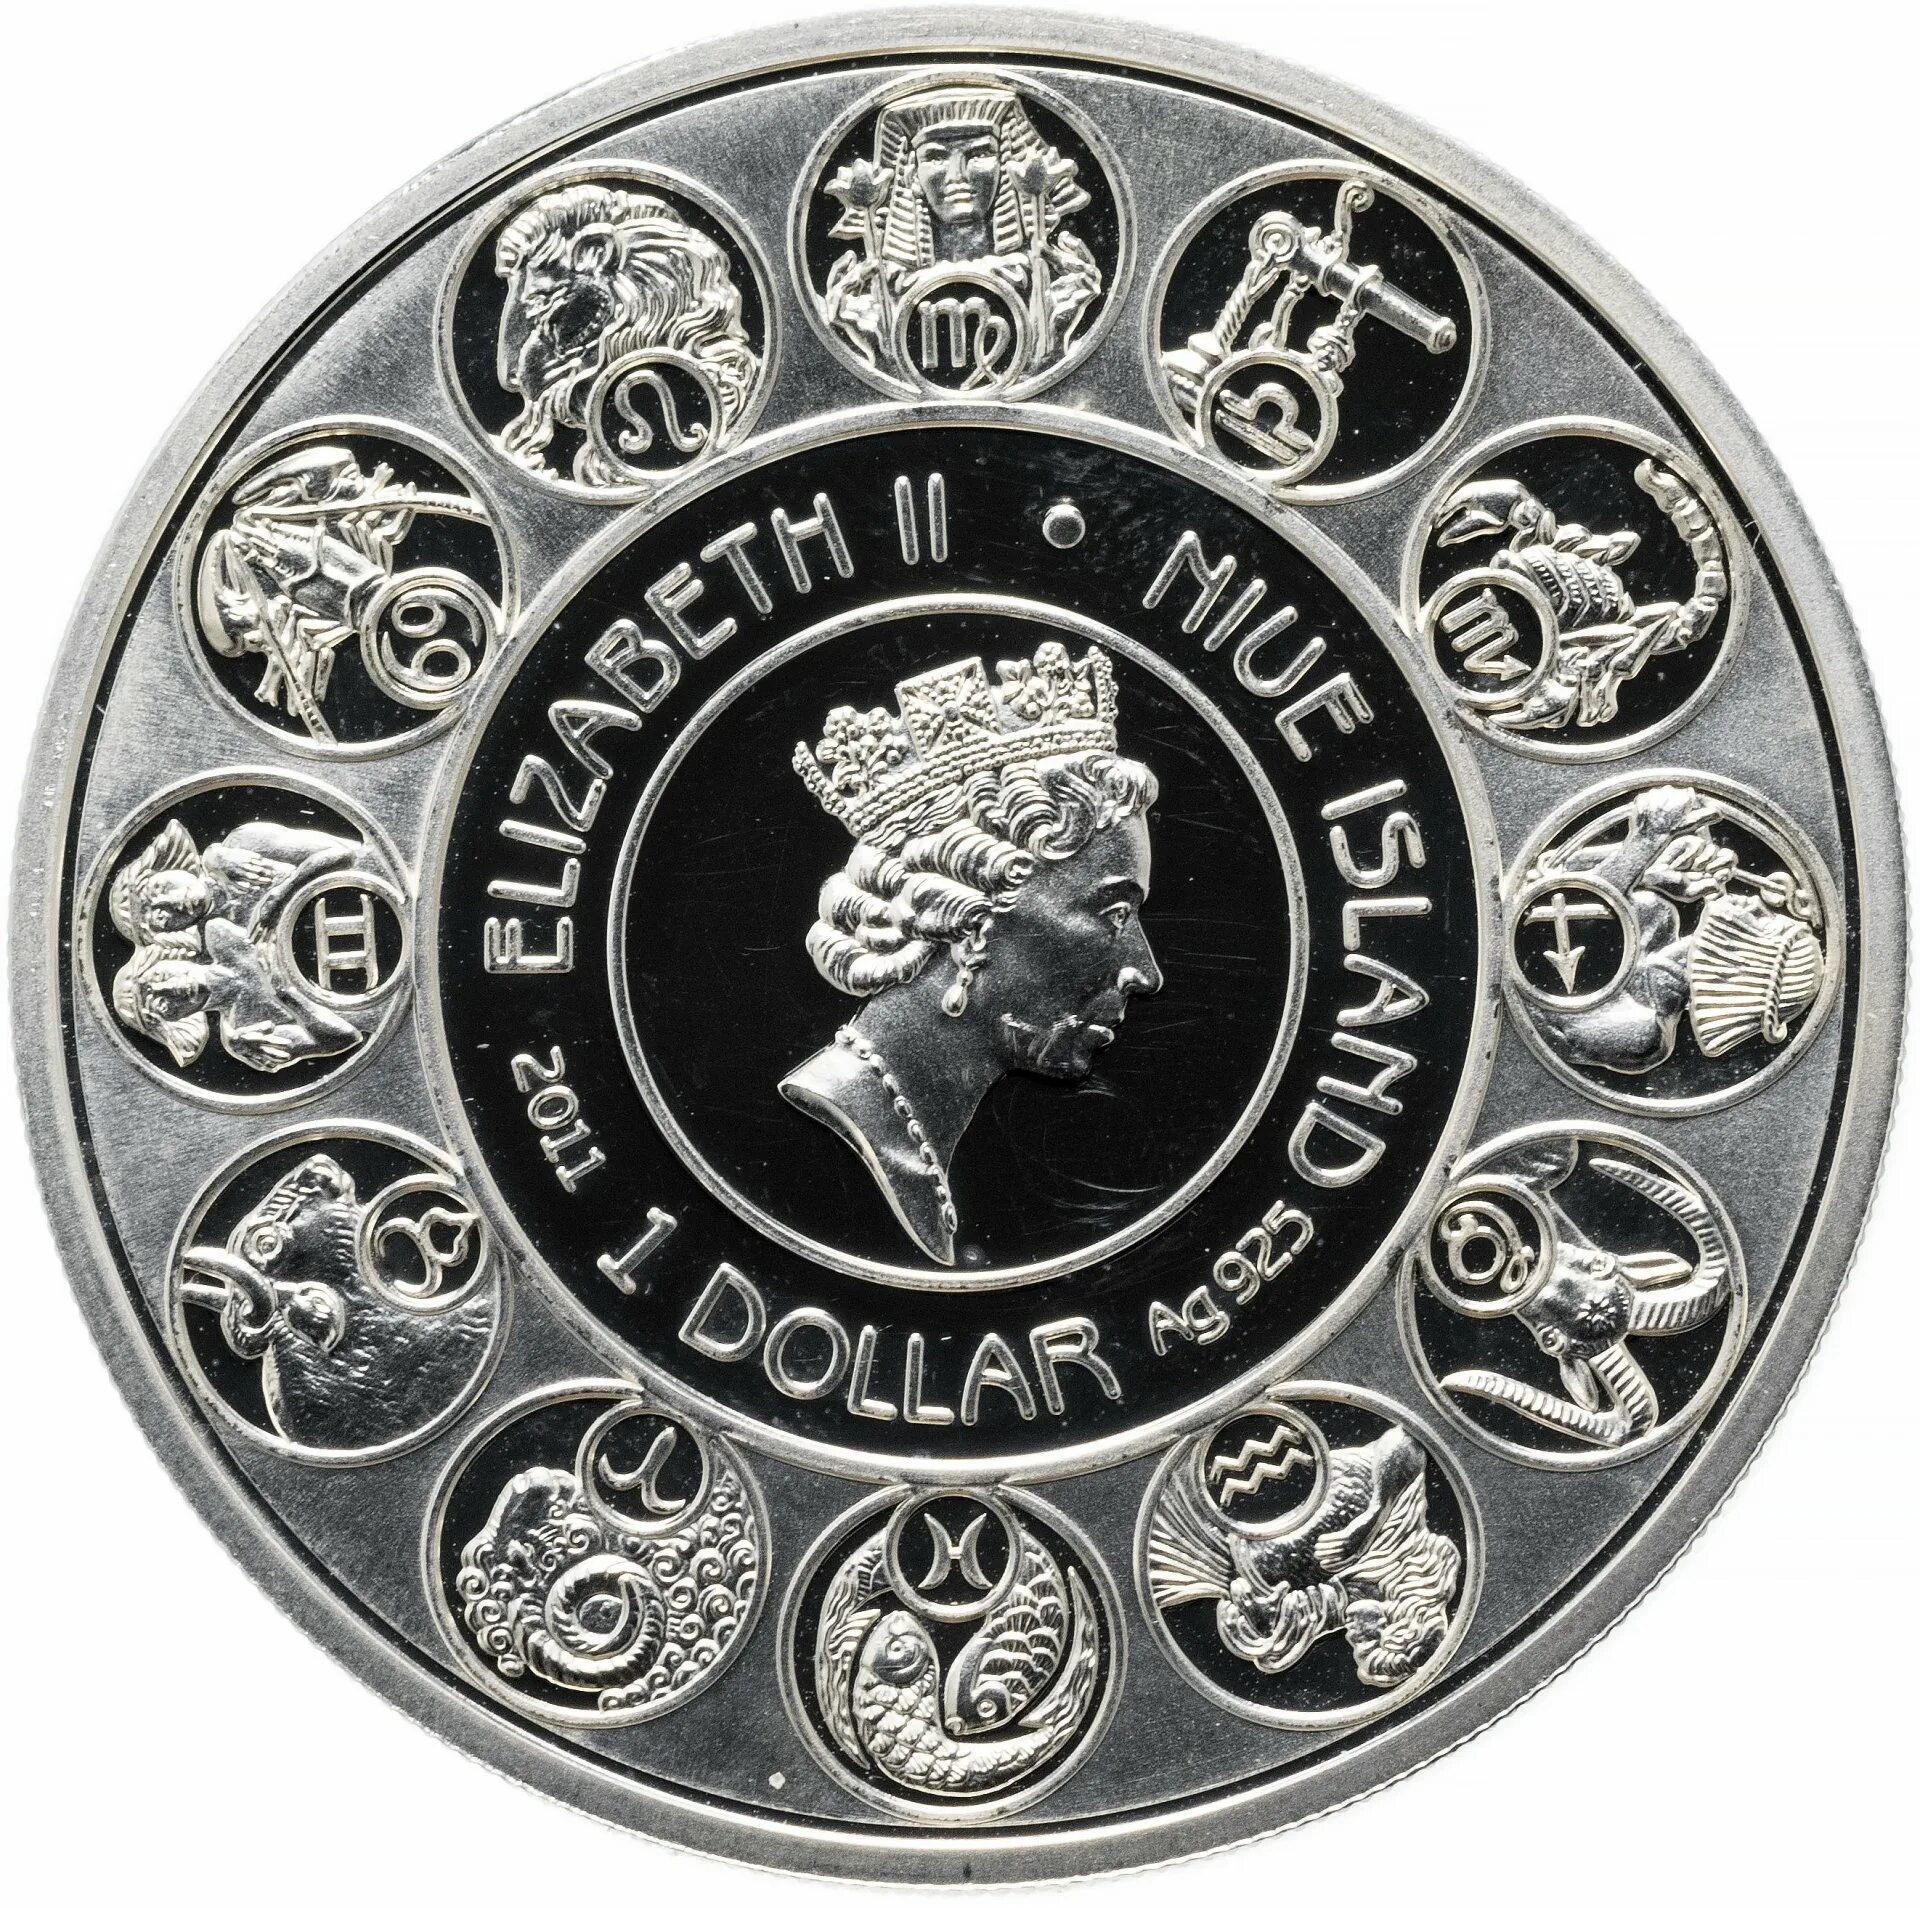 Монета знак зодиака купить. Ниуэ 1 доллар, 2010 знаки зодиака - Козерог. Монеты серебро острова Ниуэ. Монеты знаки зодиака. Ниуэ 1 доллар, 2014 знаки зодиака.